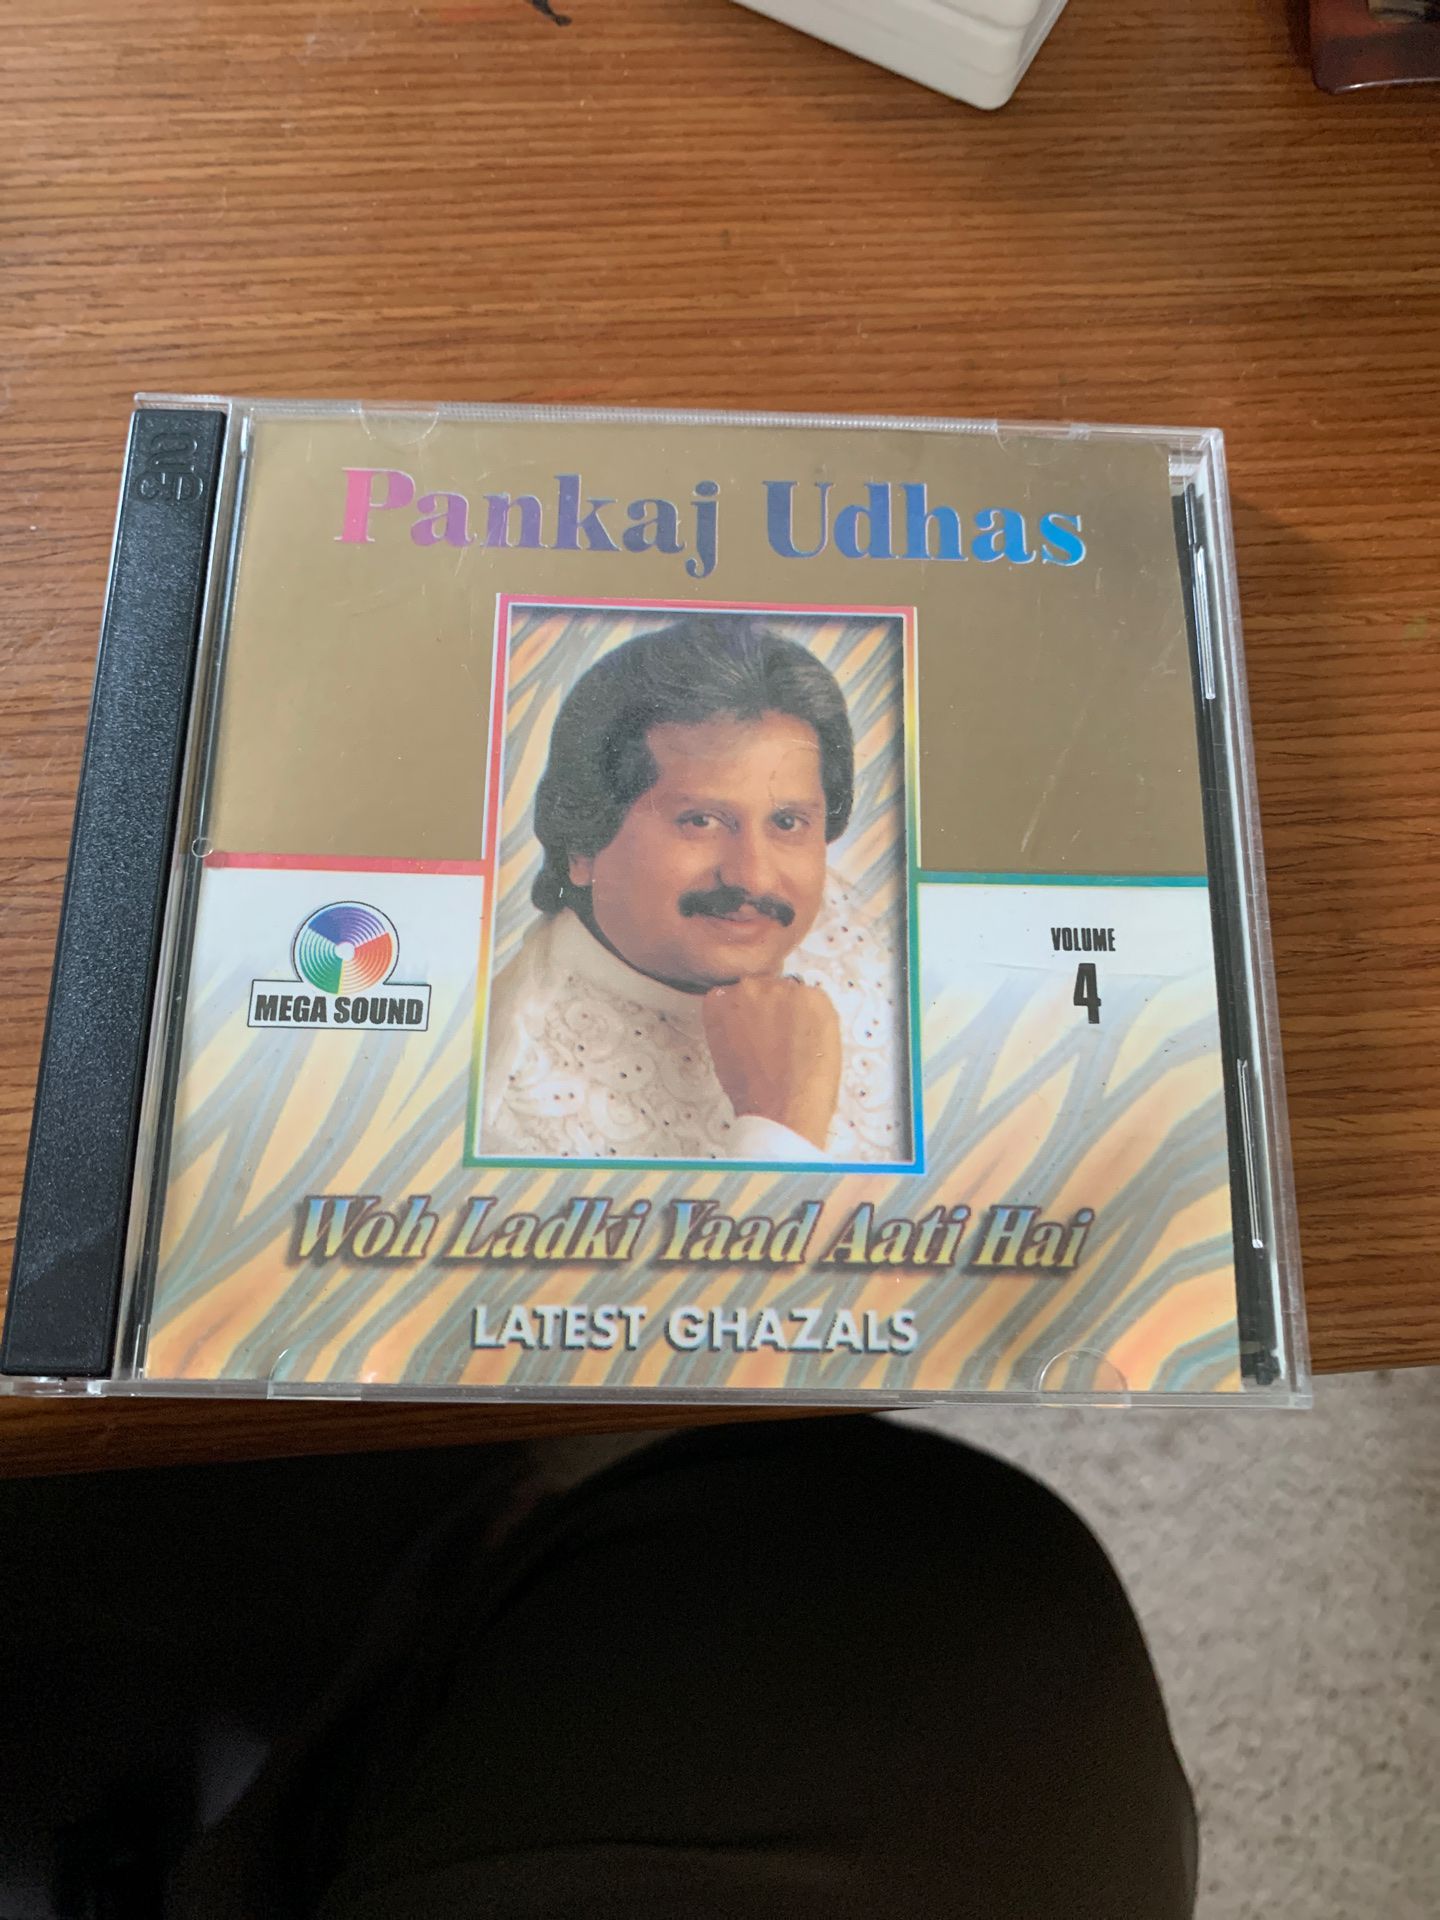 FREE Audio CD Volume 4 Latest Ghazals By Pankaj Udhas